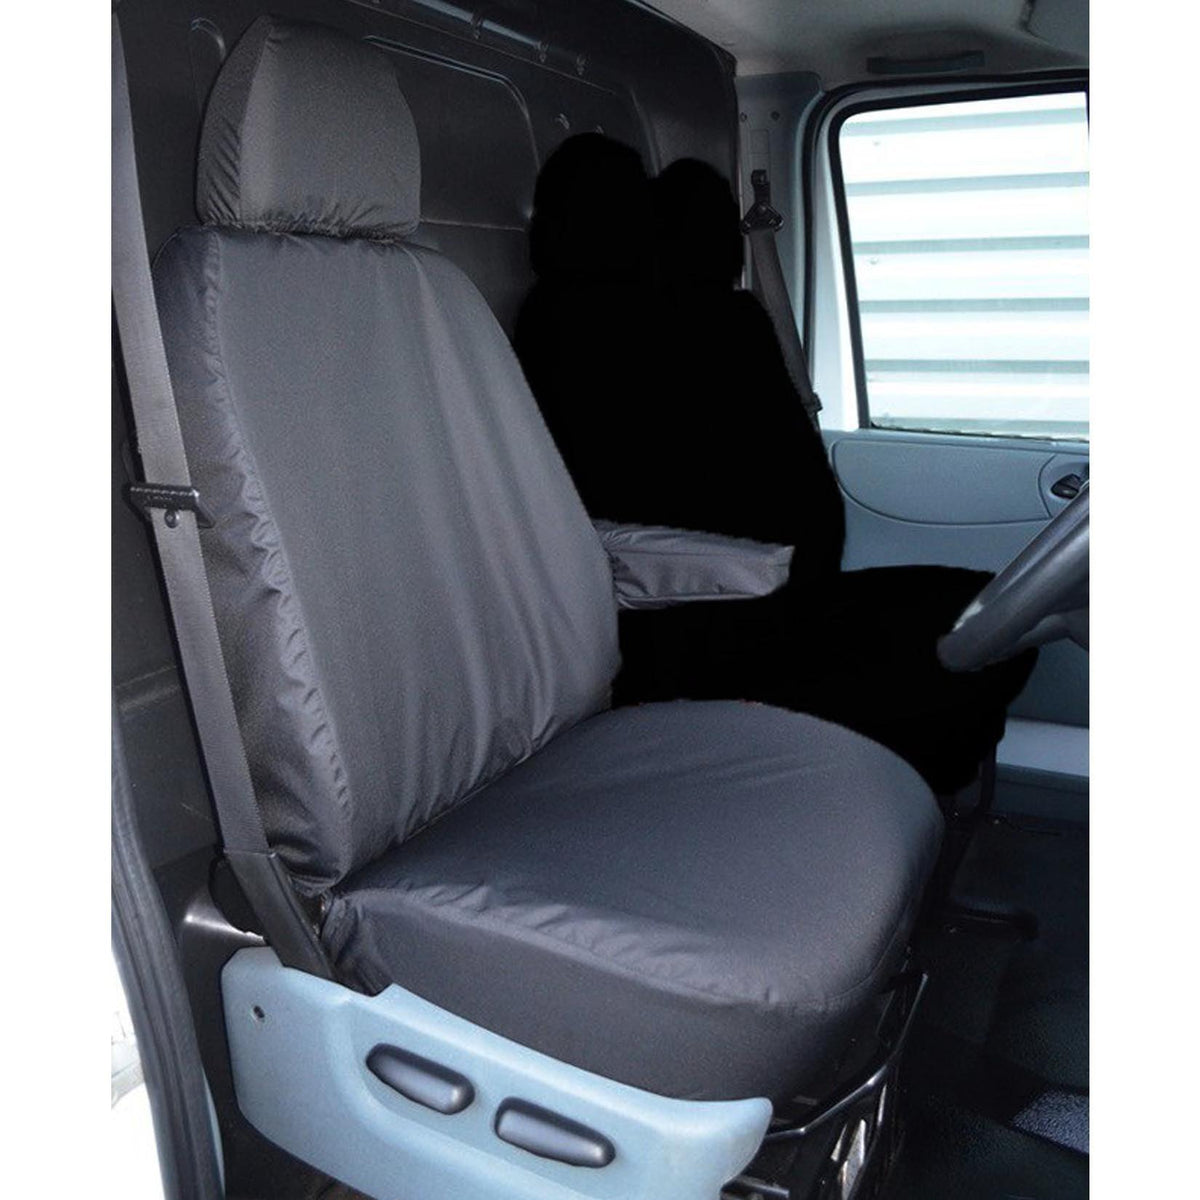 FORD TRANSIT VAN 2000-2013 SINGLE DRIVER SEAT COVER - BLACK - Storm Xccessories2